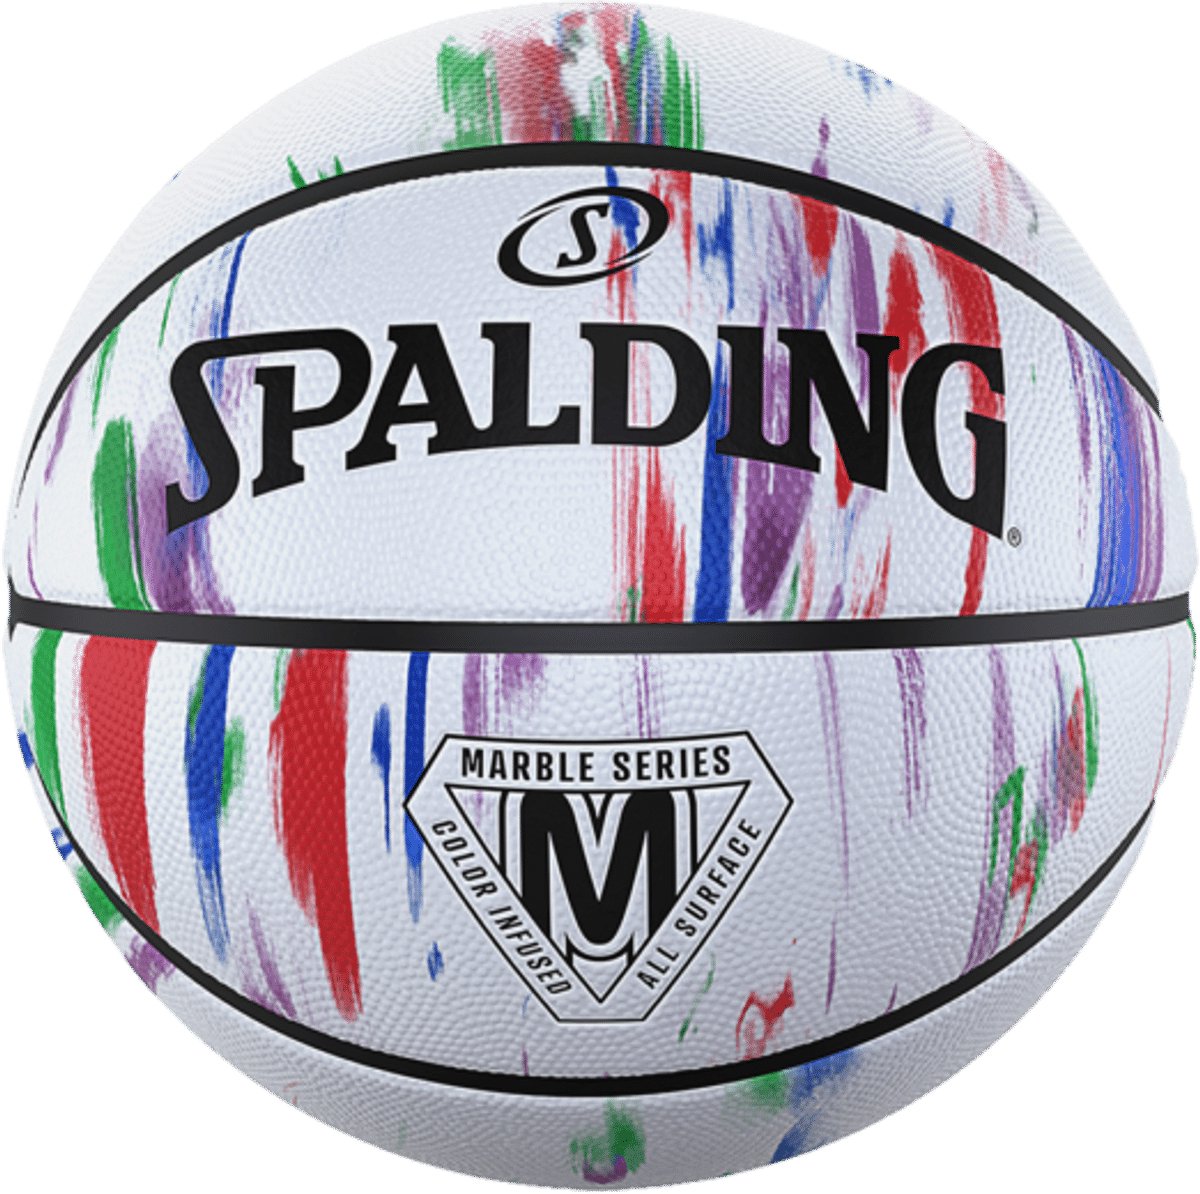 Spalding Marble (Size 7) Basketbal Heren - Multicolor | Maat: 7